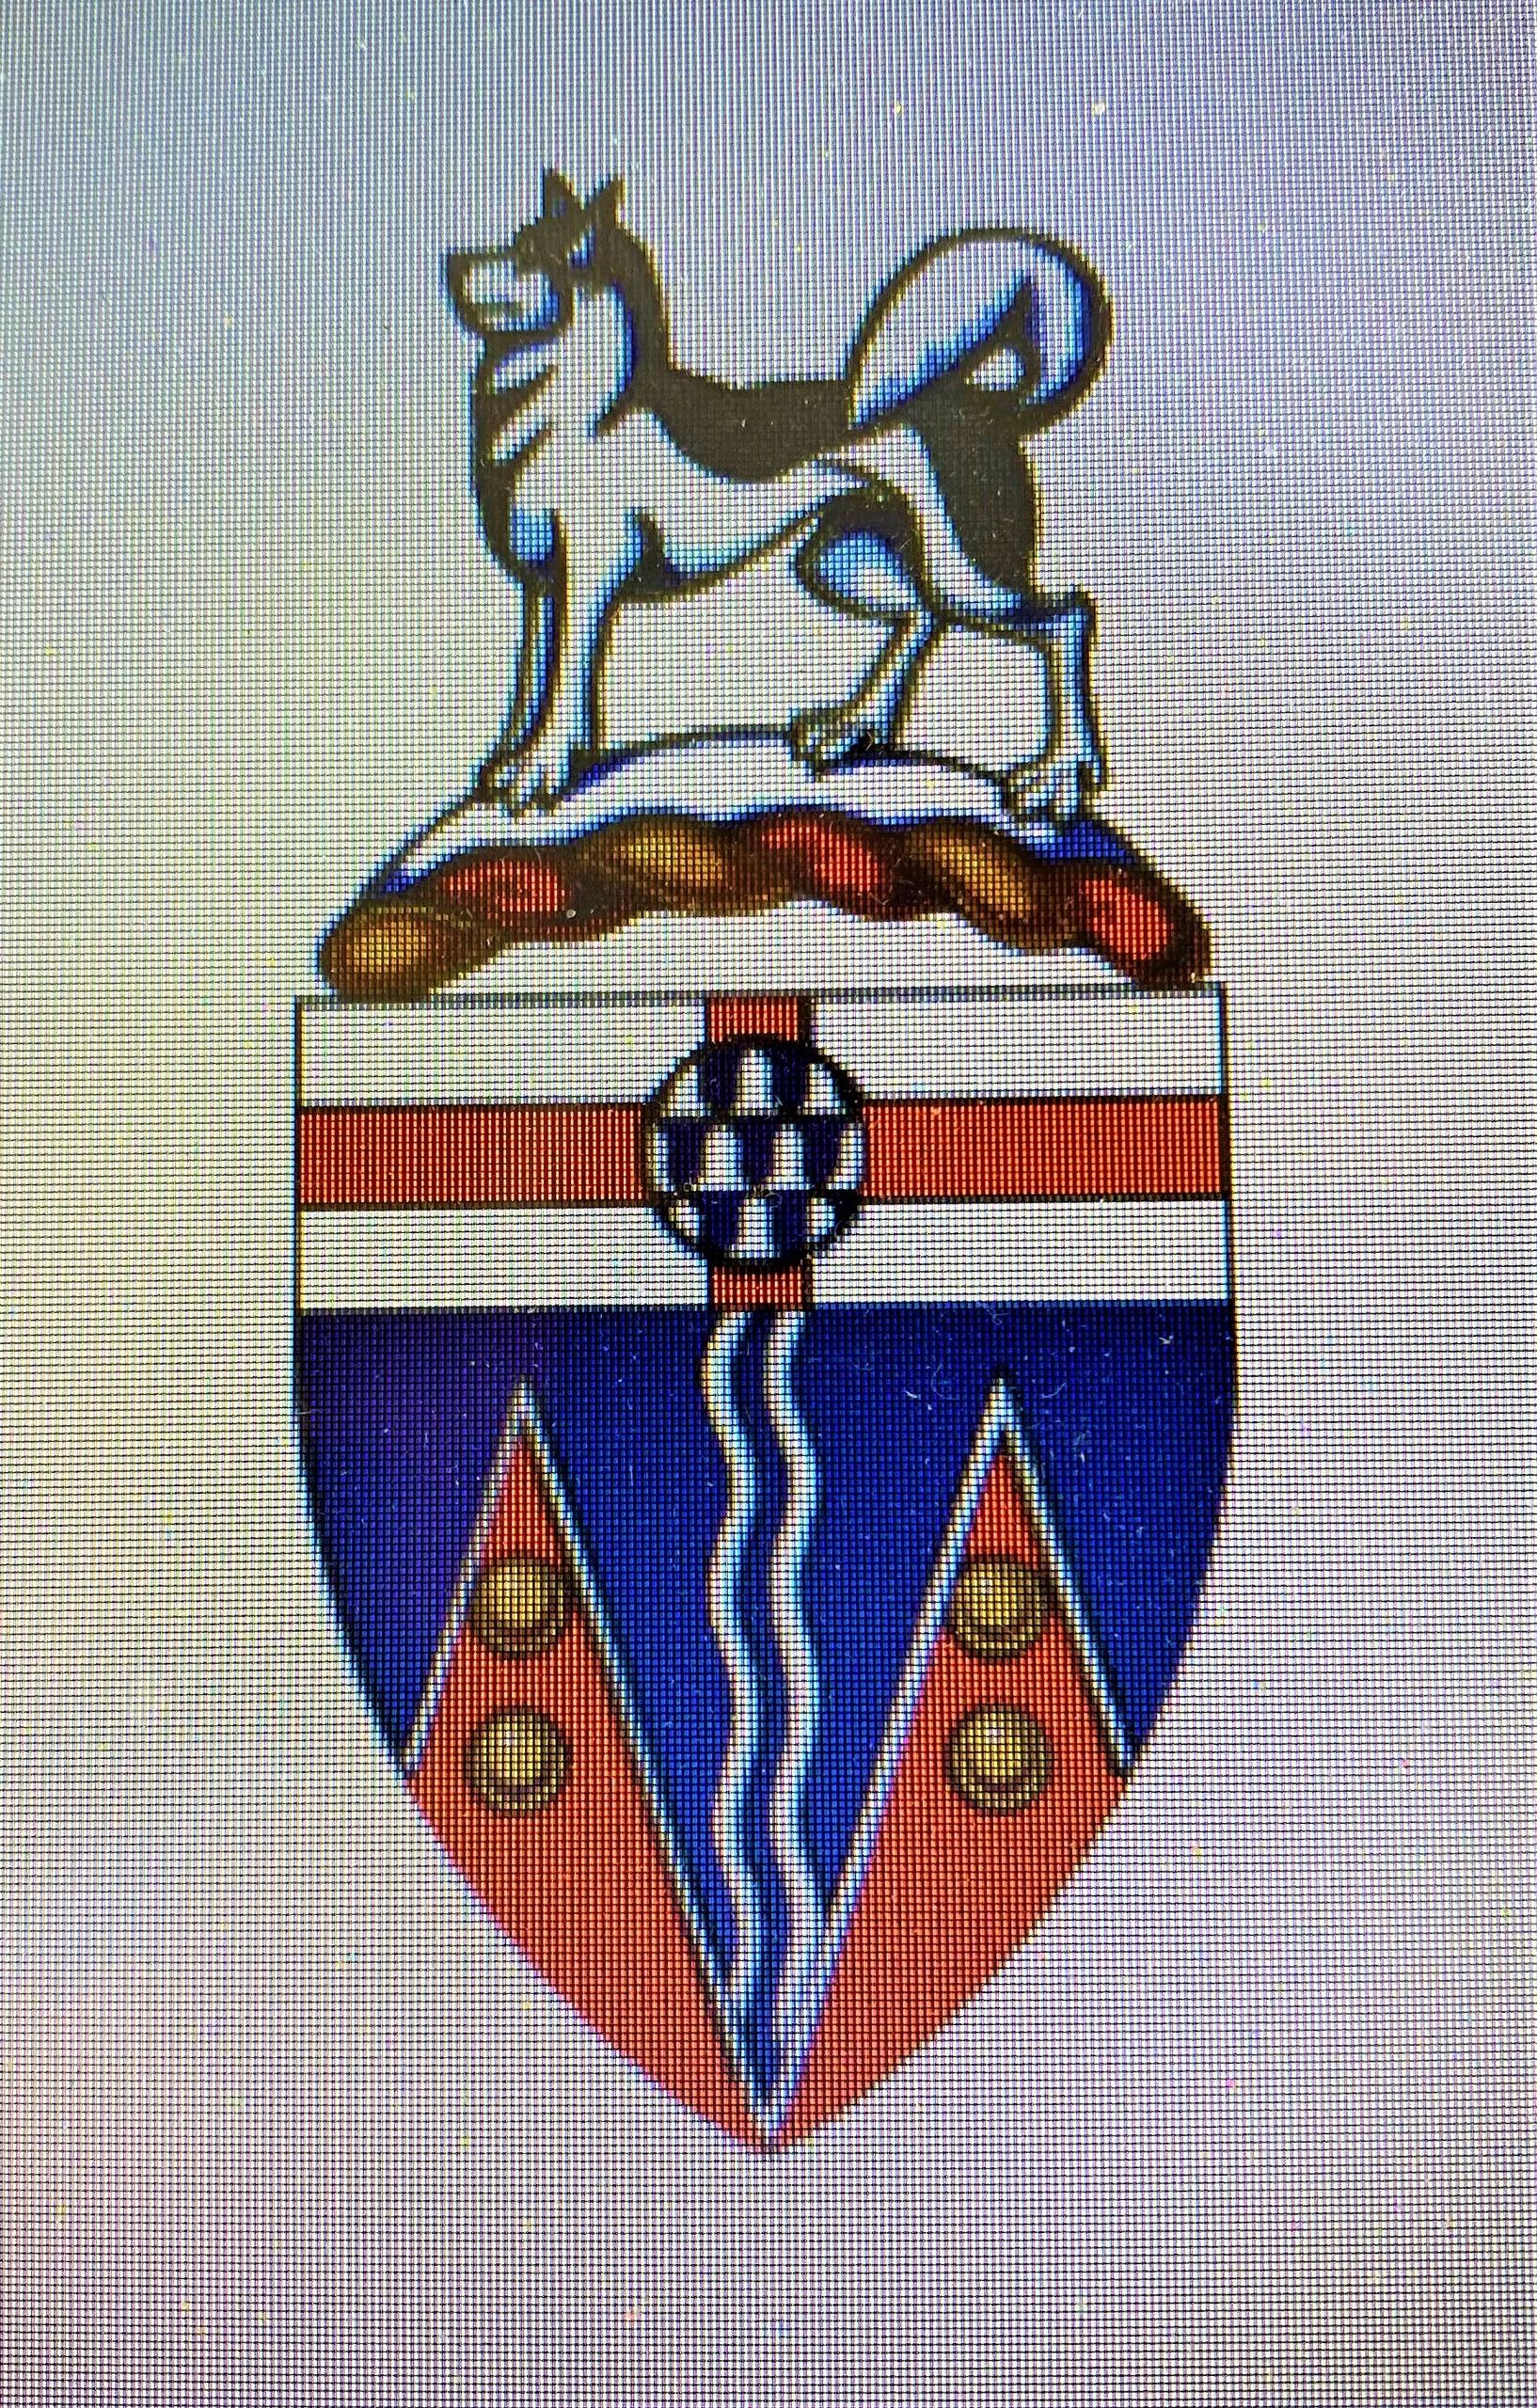 john mayo coat of arms